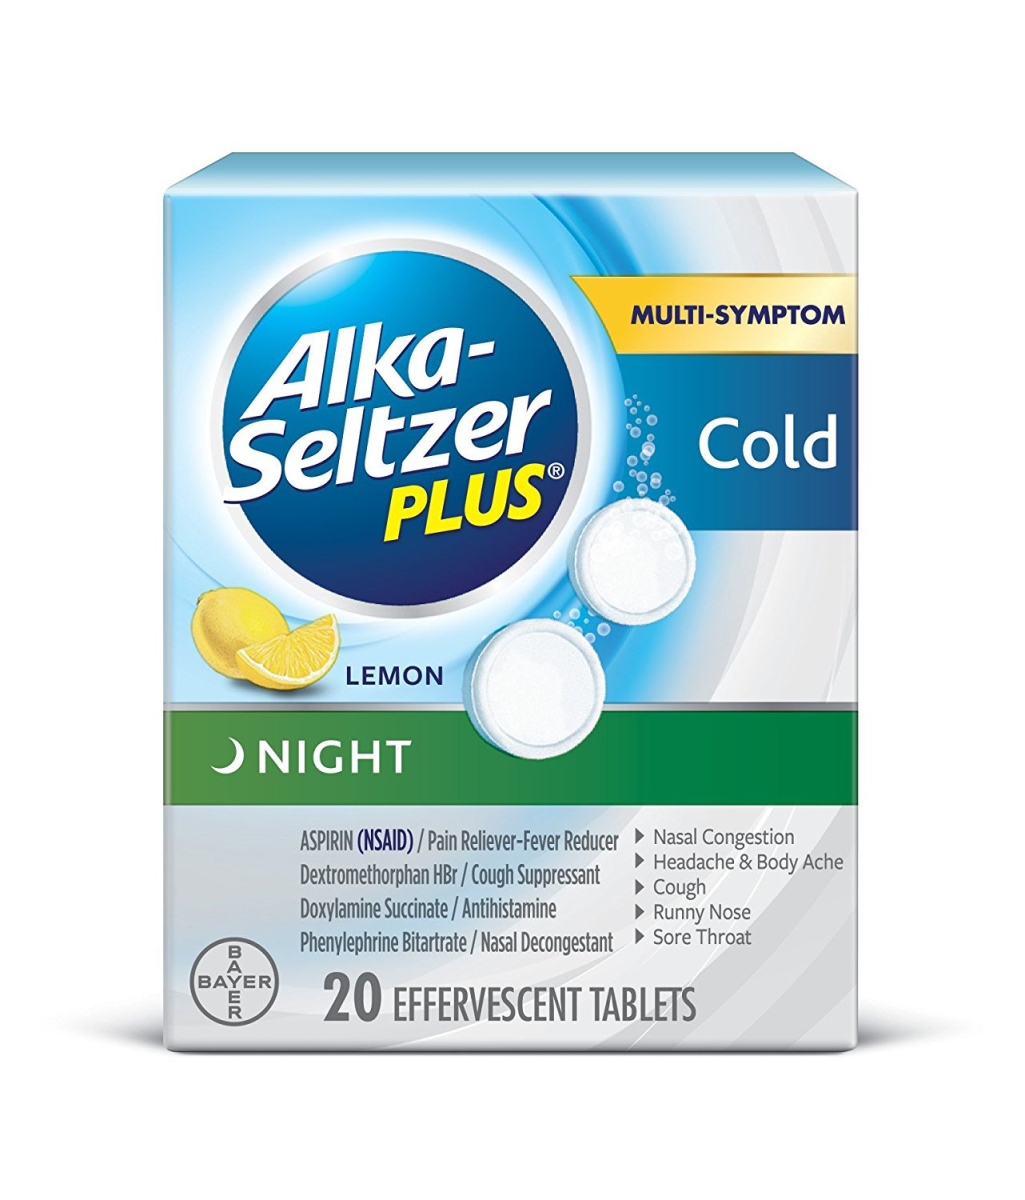 Healing Solutions 0300543 Alka-seltzer Plus Night Cold Medicine, Lemon Effervescent Tablets - 20 Count